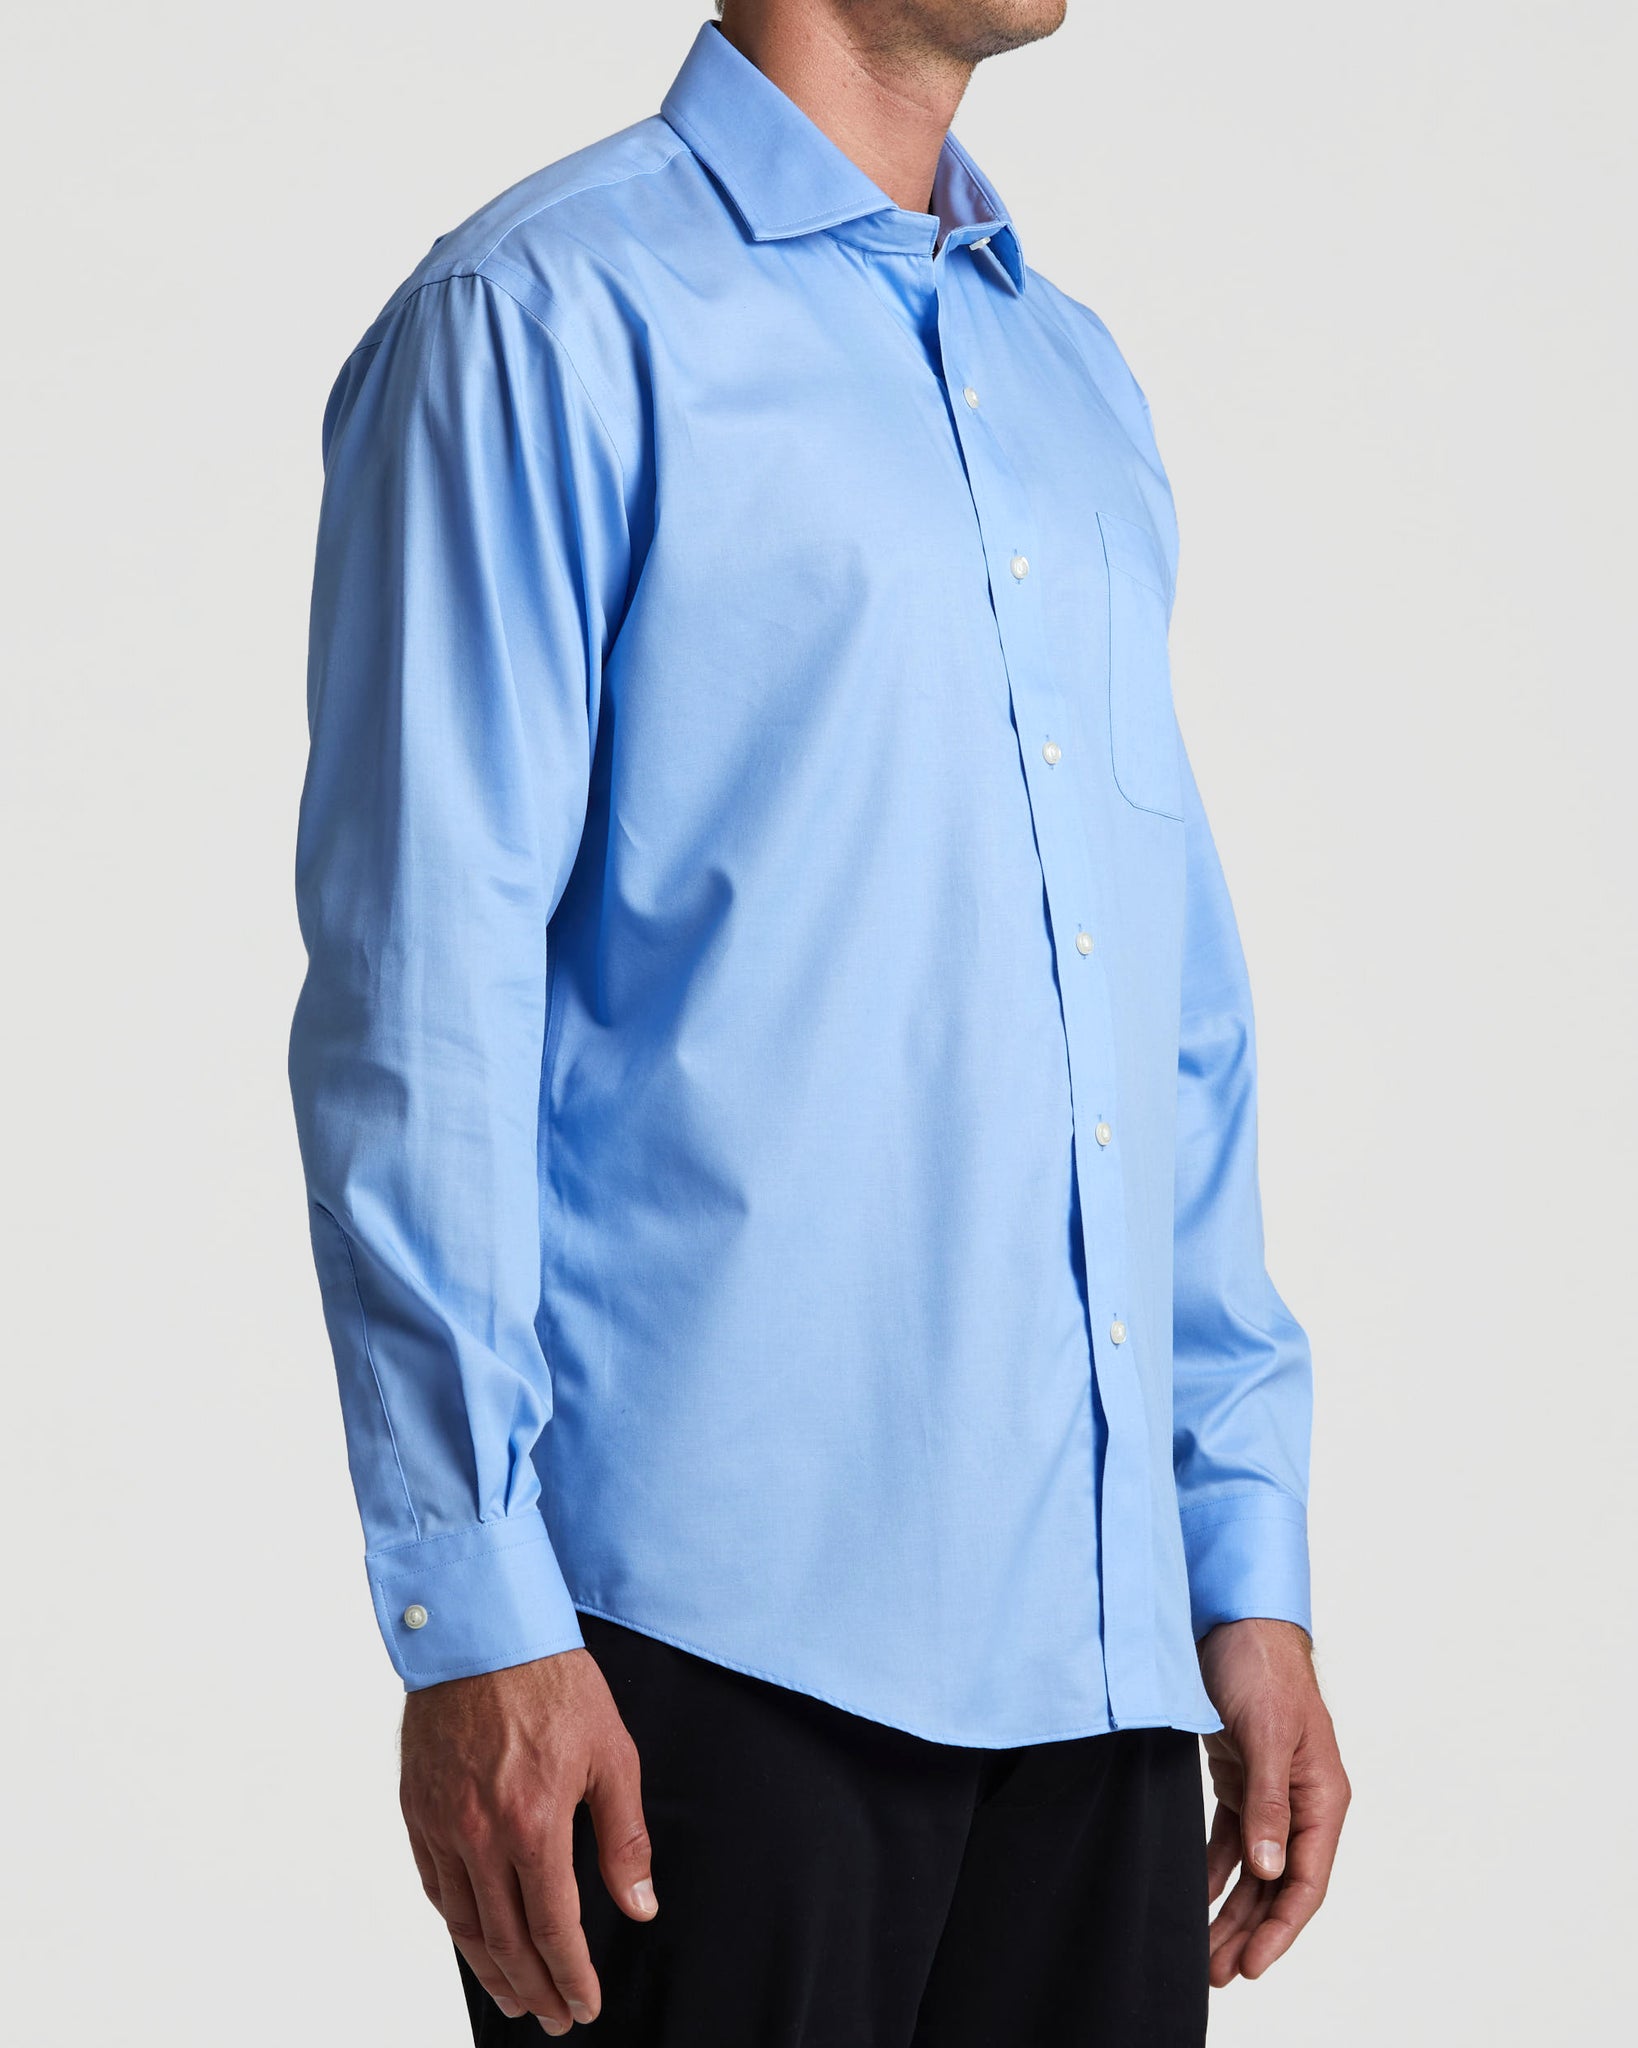 MagnaClick Regular Fit Dress Shirt (Mens) - Blue